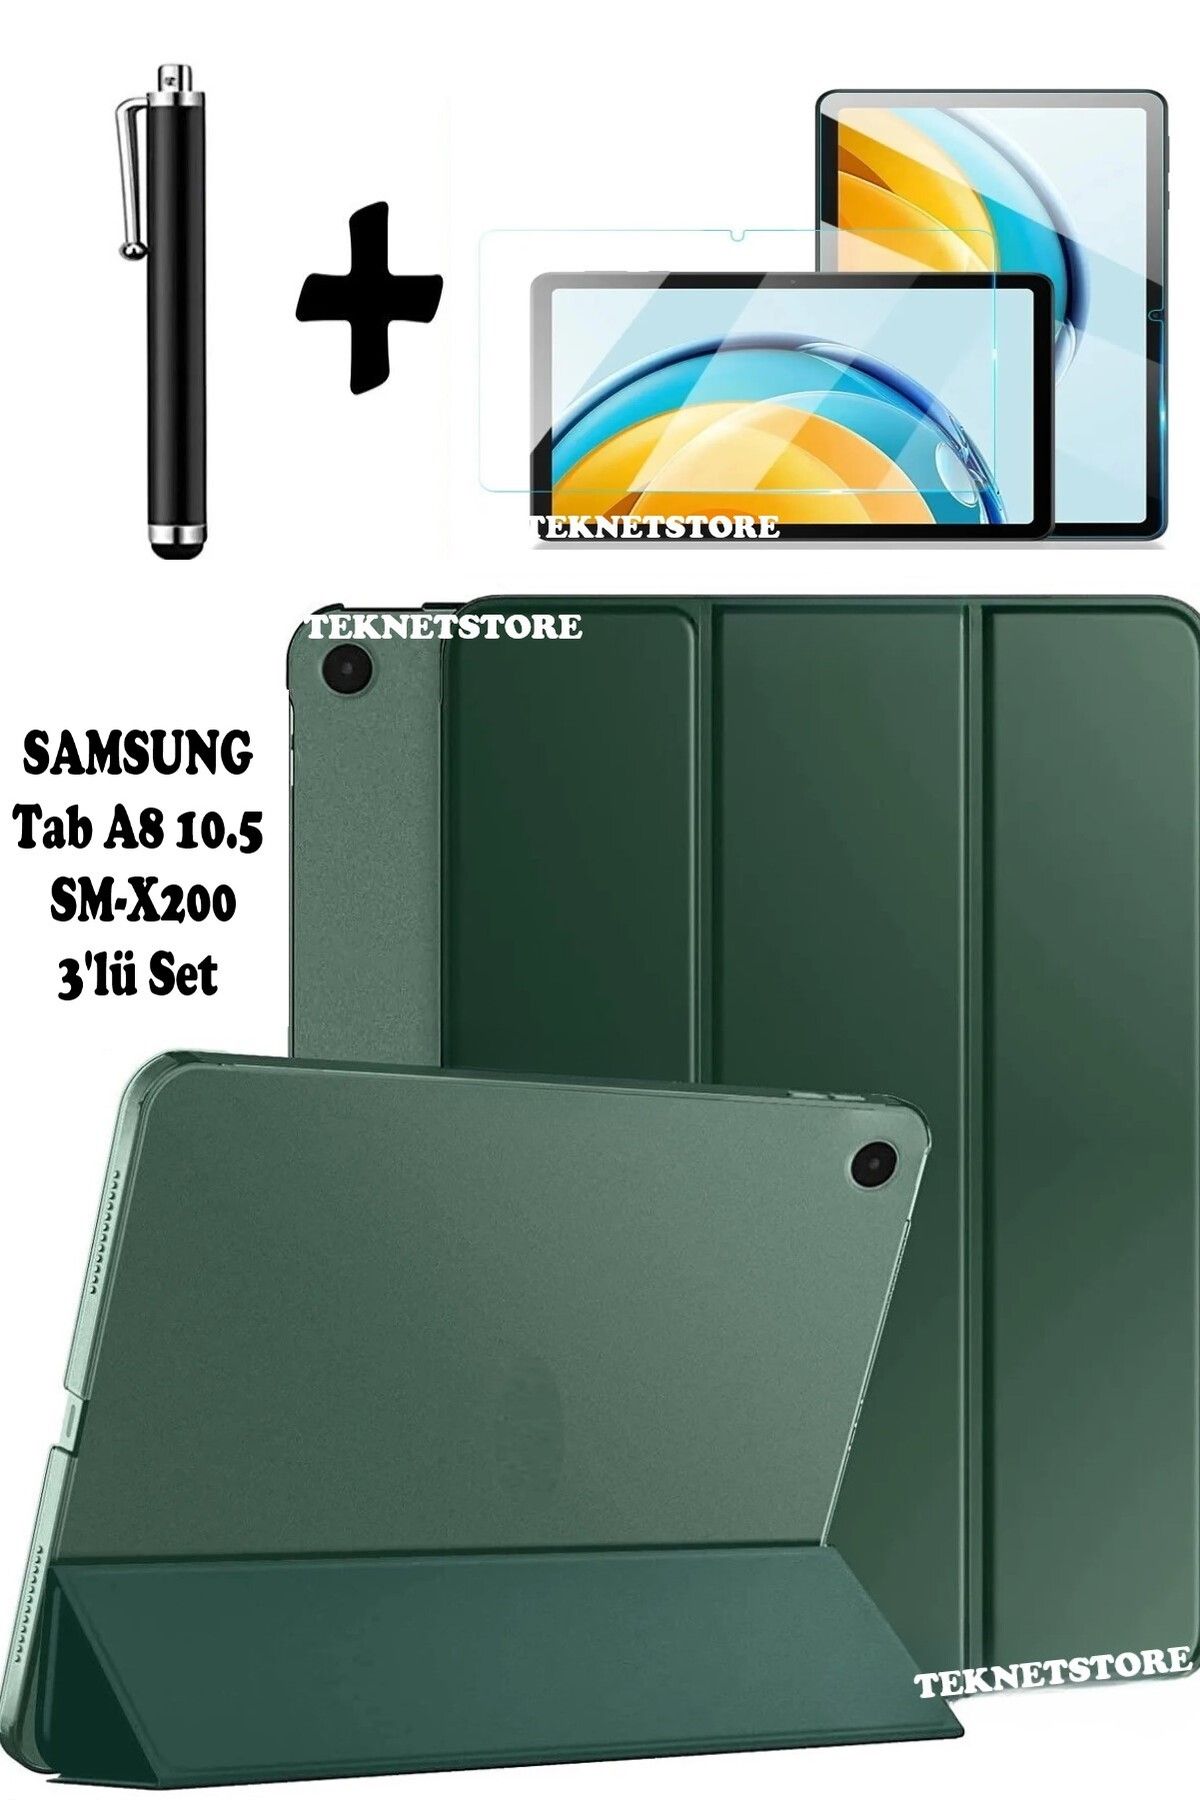 TEKNETSTORE Samsung Galaxy Tab A8 10.5 Inç Sm-x200 Uyumlu Uyku Modlu Tablet Kılıfı Ekran Koruyucu Kalem